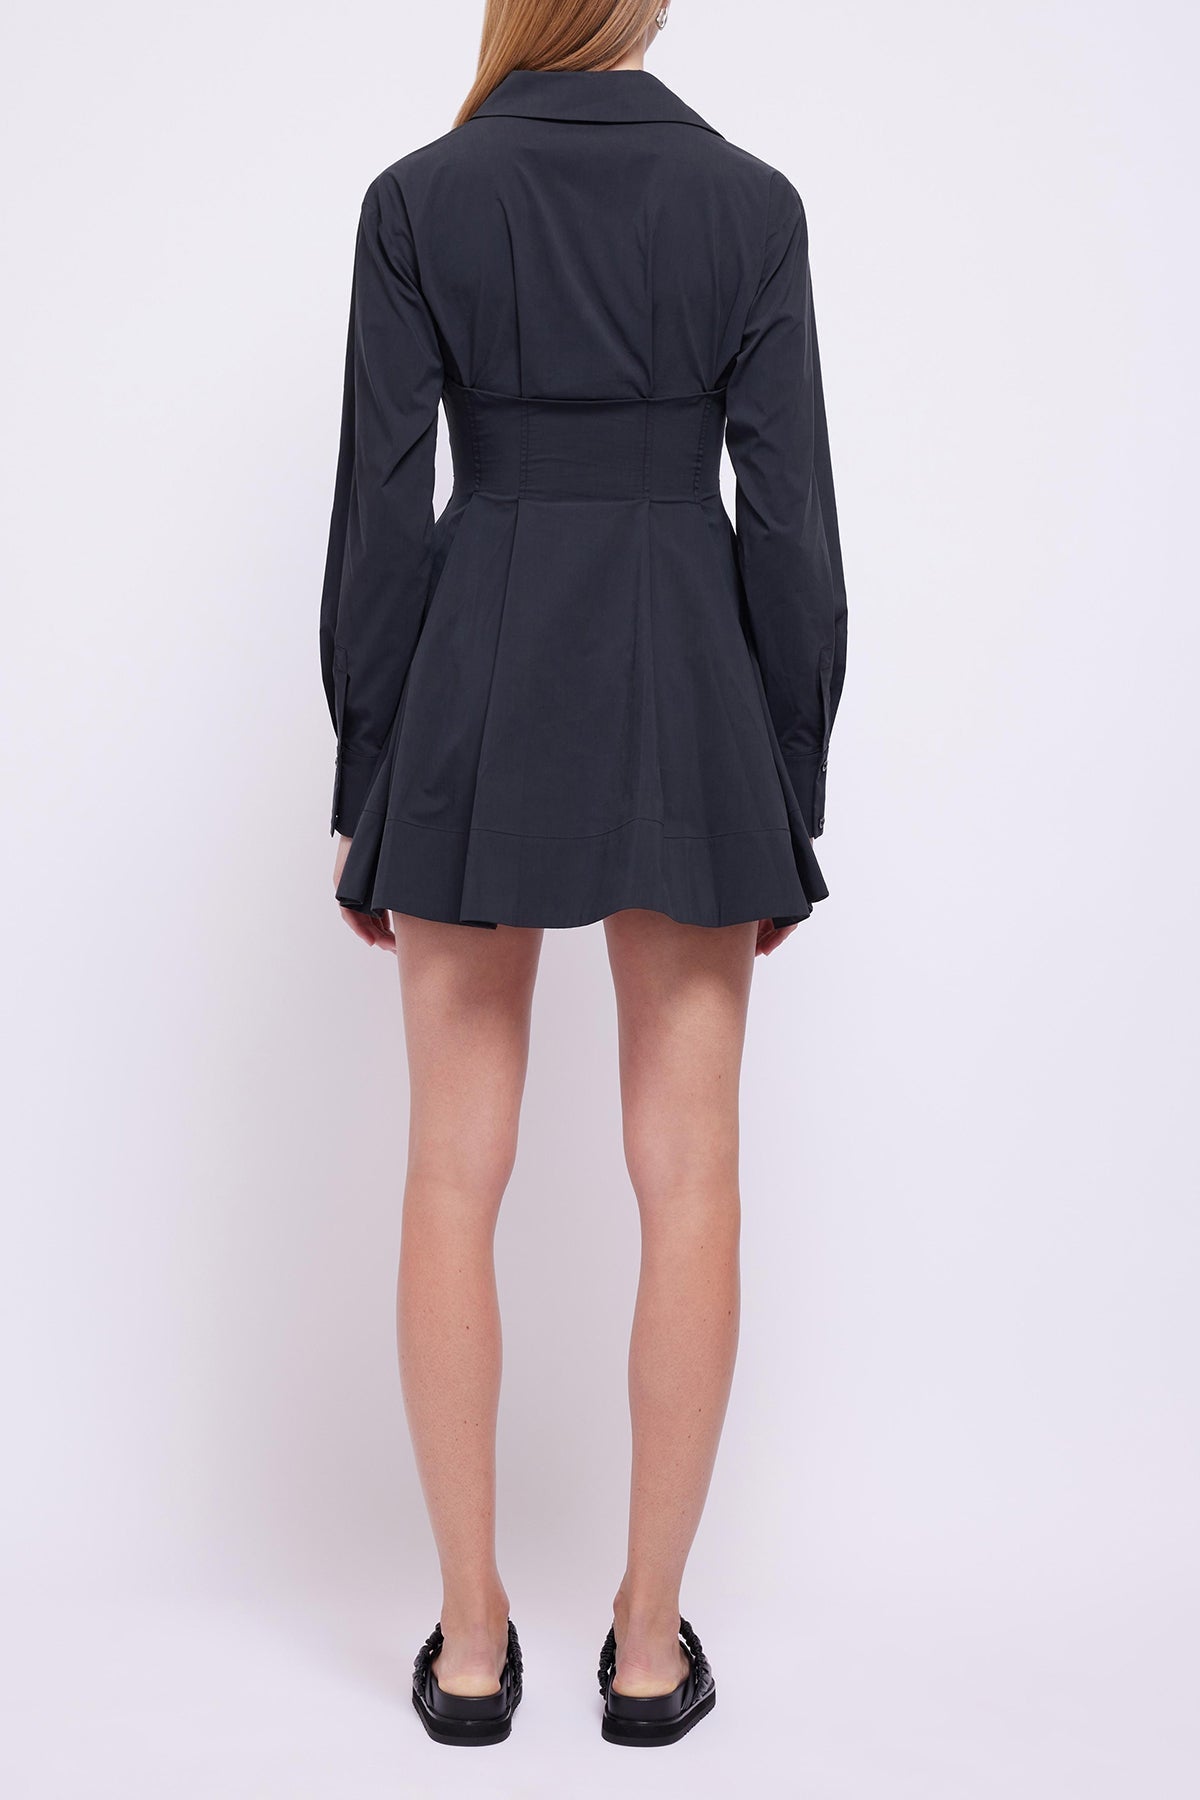 Carolyn Long Sleeve Bustier Mini Dress in Black - shop-olivia.com